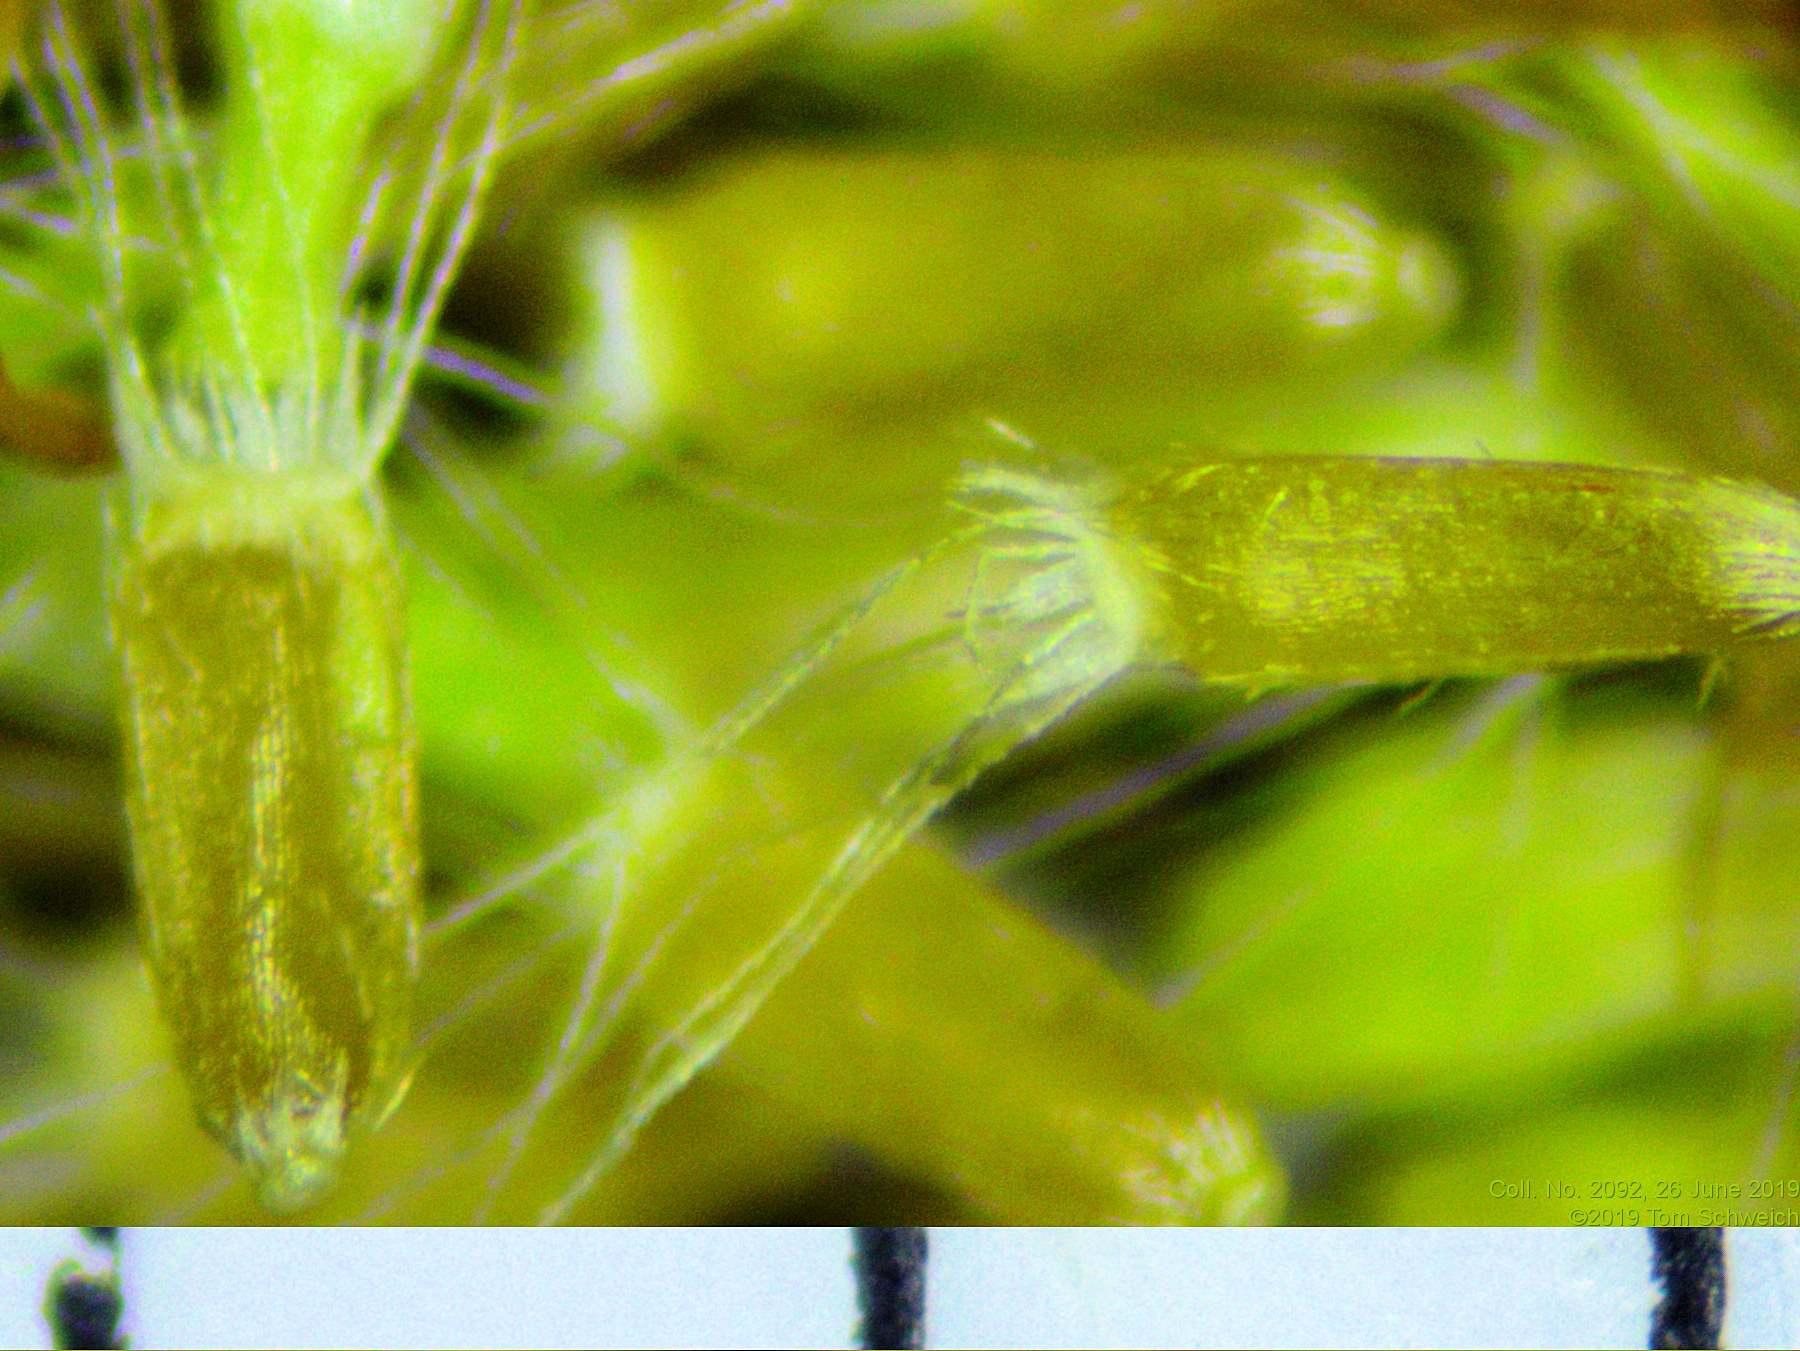 Asteraceae Erigeron divergens